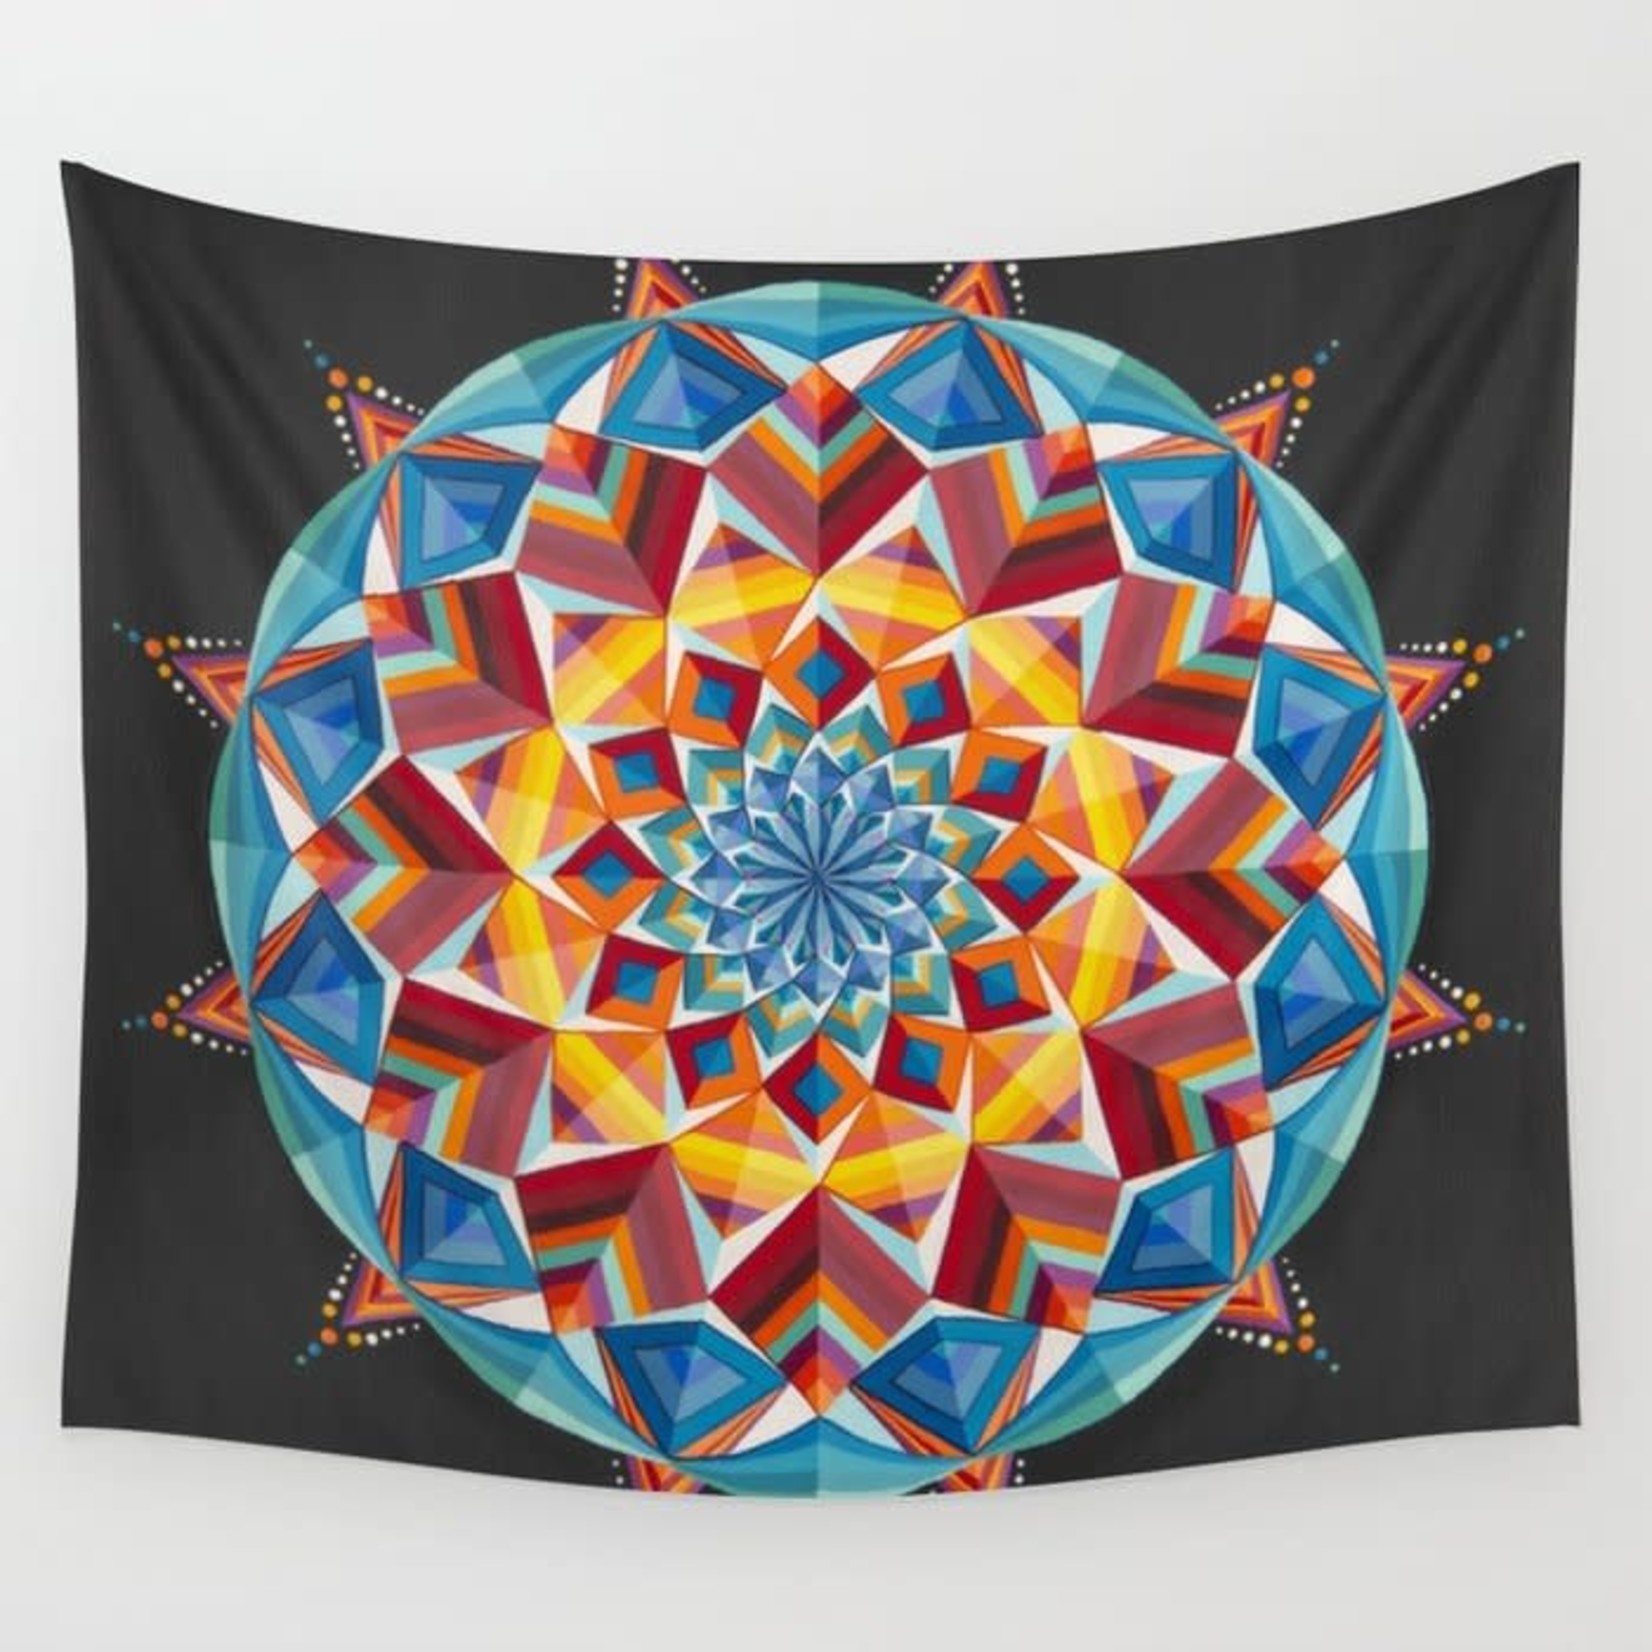 Stirling Studios Tapestry - "Mojave" Mandala - Large - 88x104"